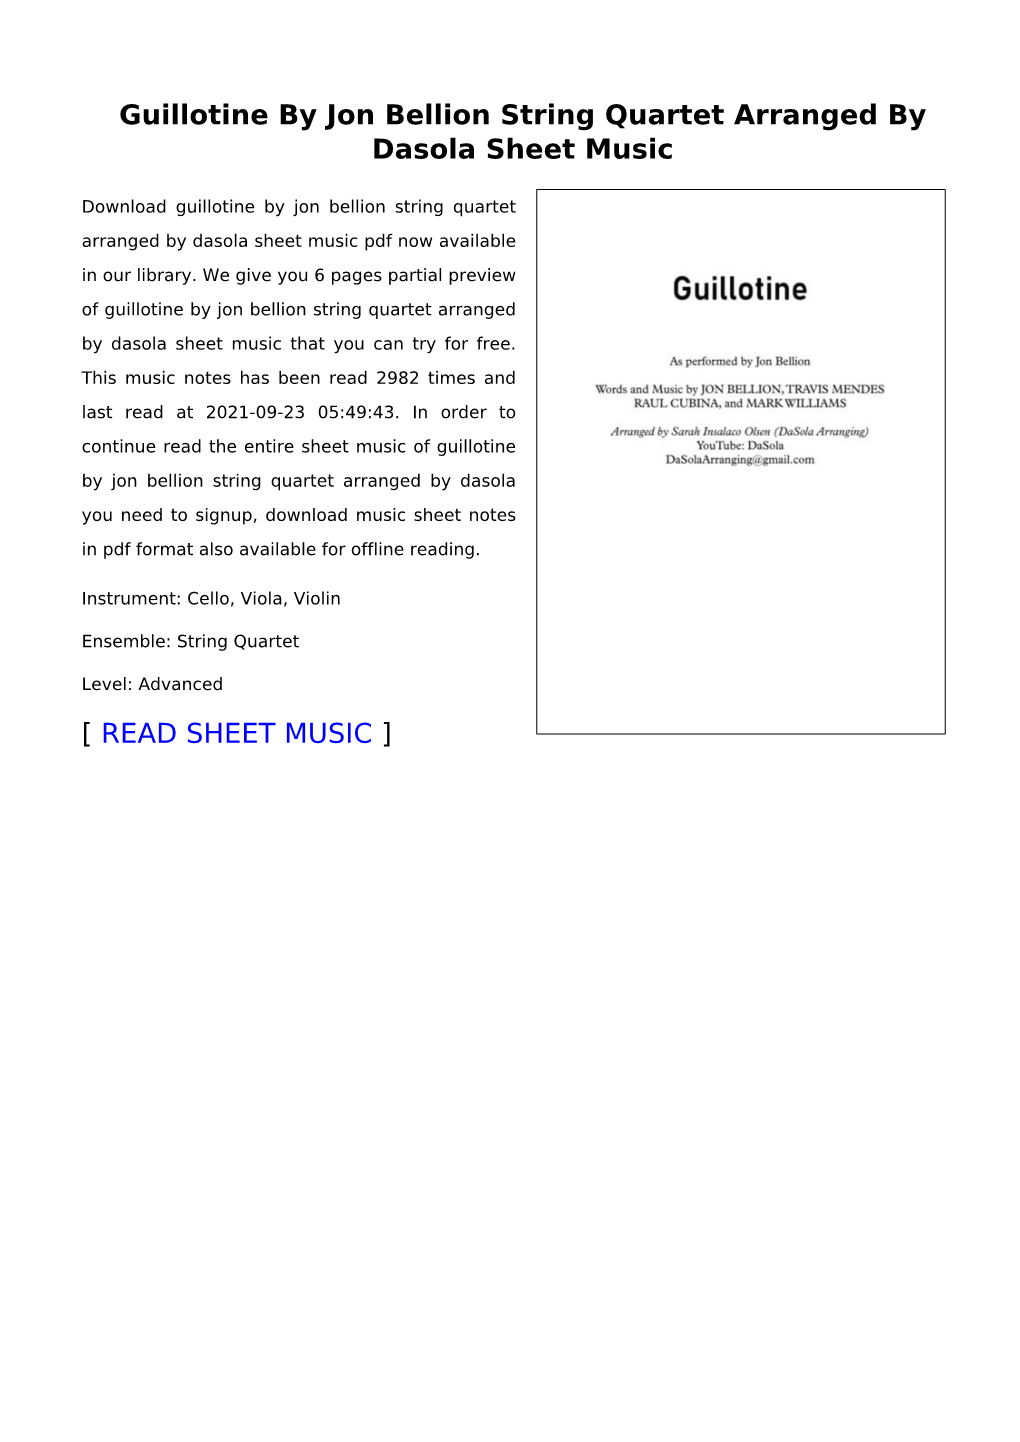 Guillotine by Jon Bellion String Quartet Arranged by Dasola Sheet Music